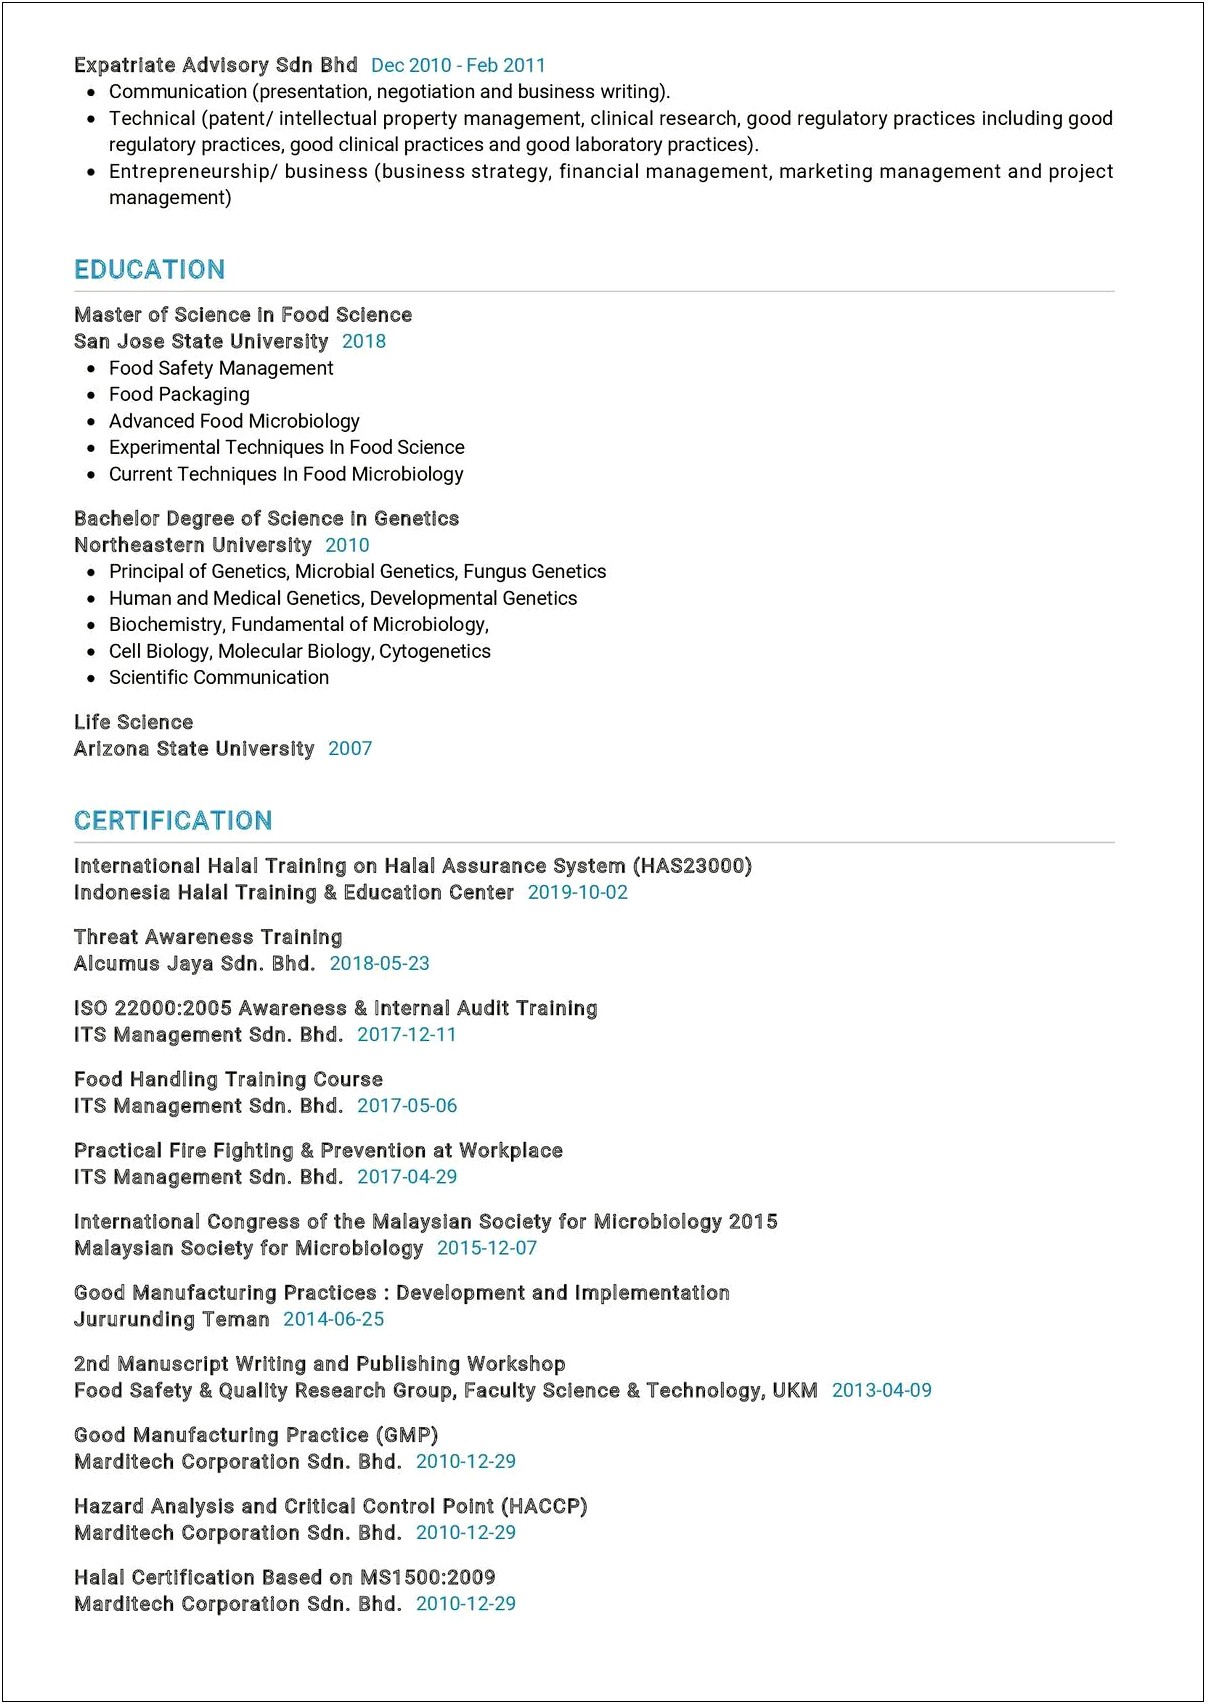 Objective For Laboratory Technician Resume